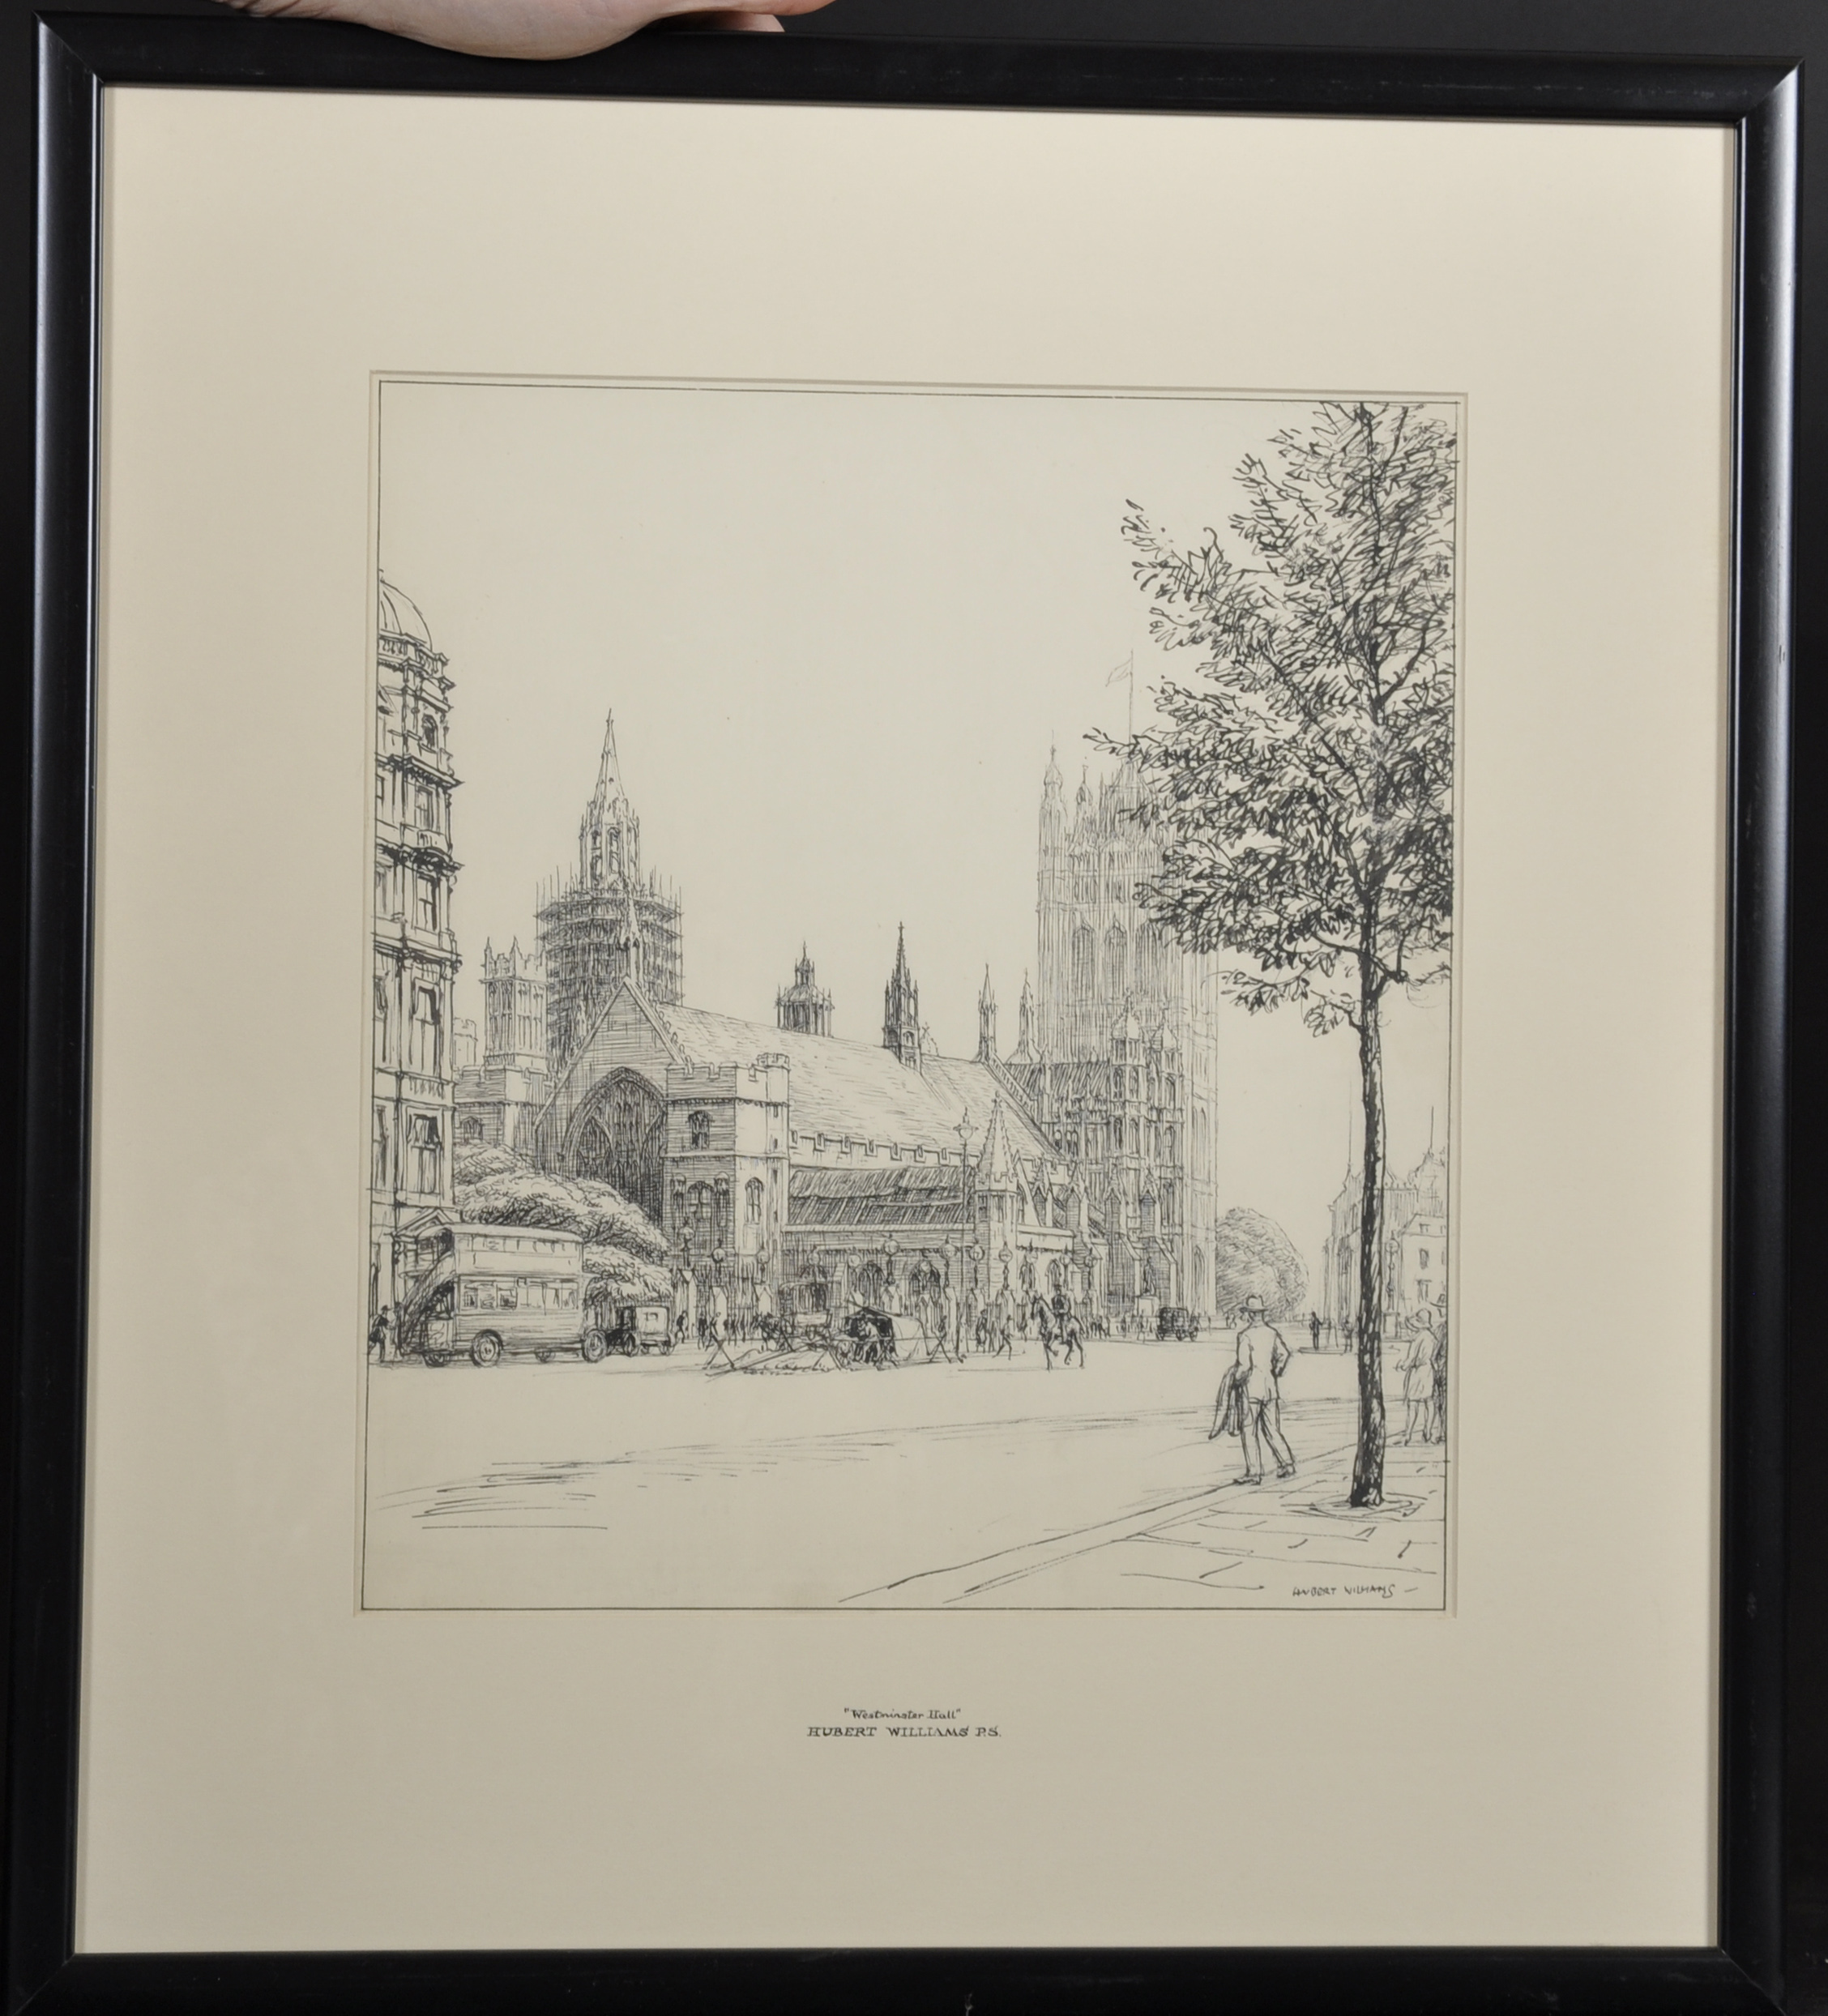 Herbert Williams (20th - 21st Century) British. "Lambeth Palace and Church, From Lambeth Bridge", - Image 9 of 11